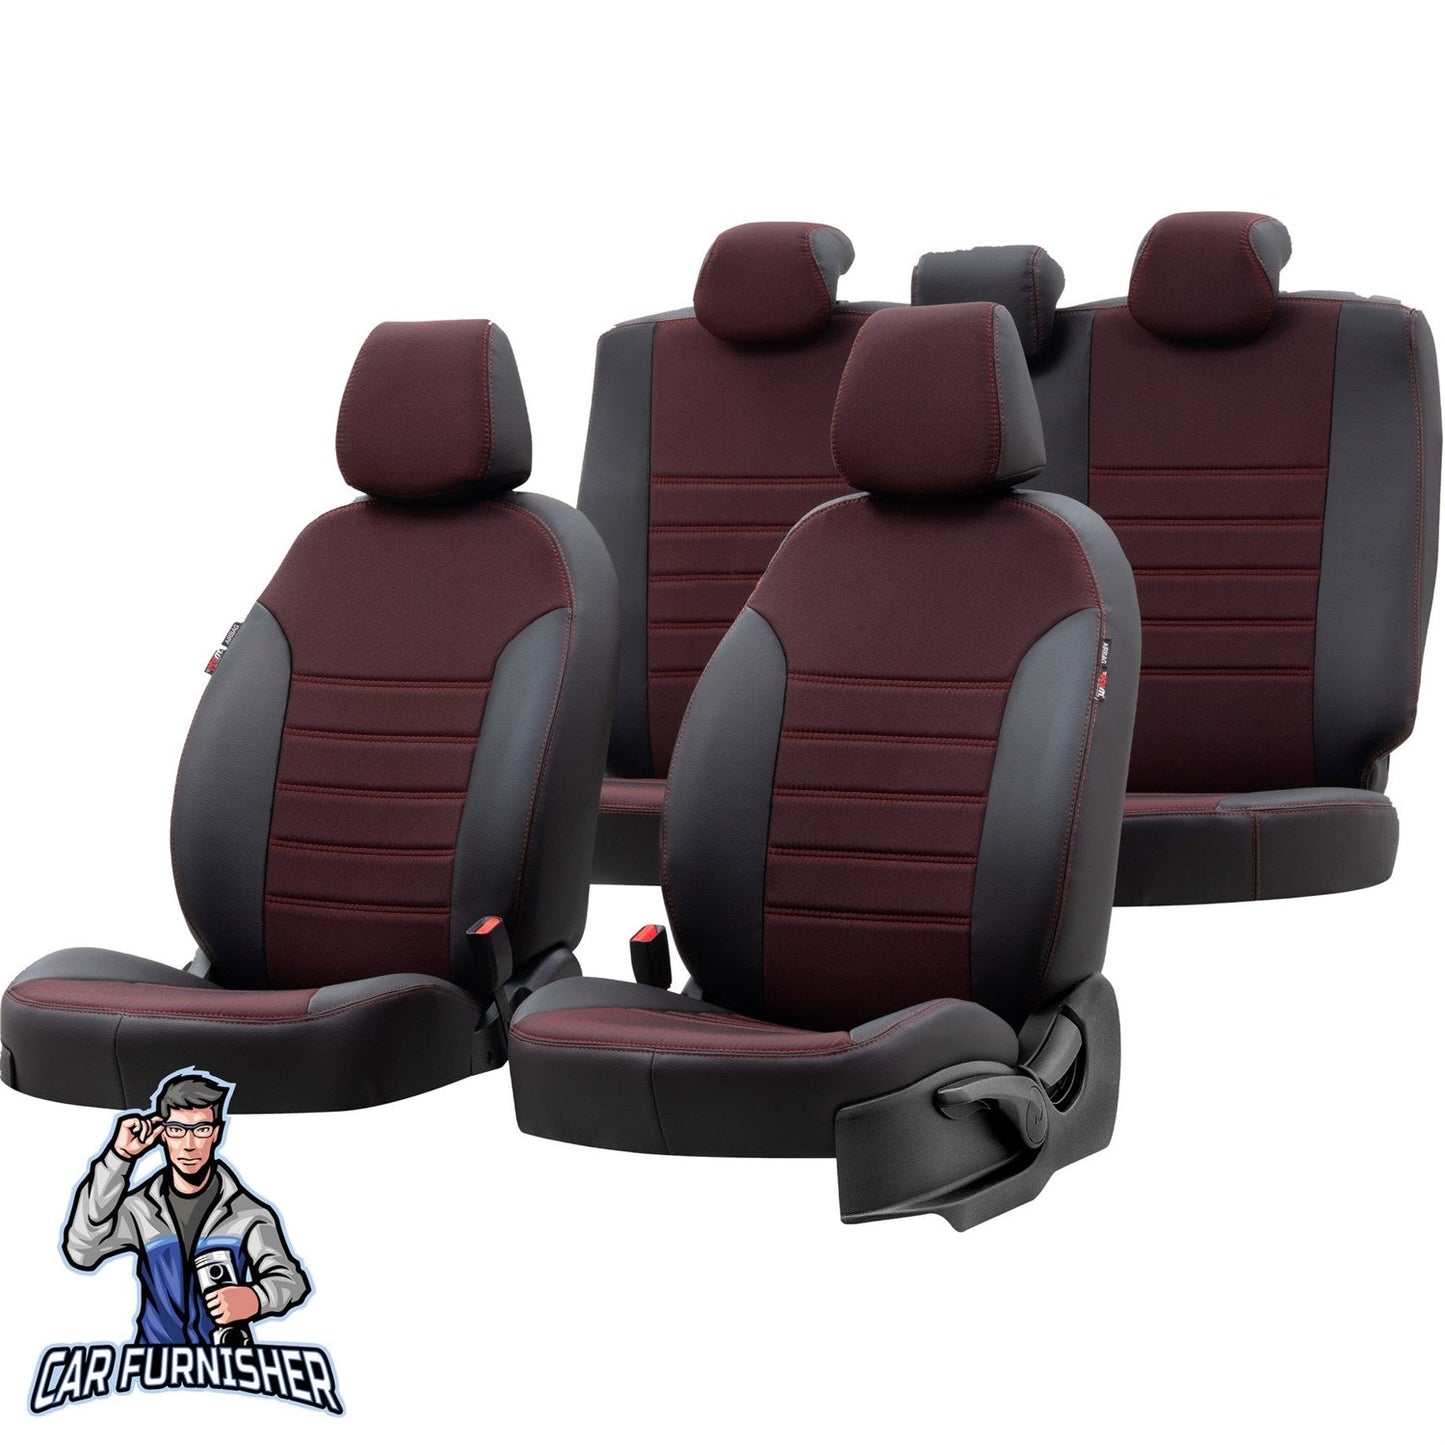 Volkswagen Bora Seat Cover Paris Leather & Jacquard Design Red Leather & Jacquard Fabric